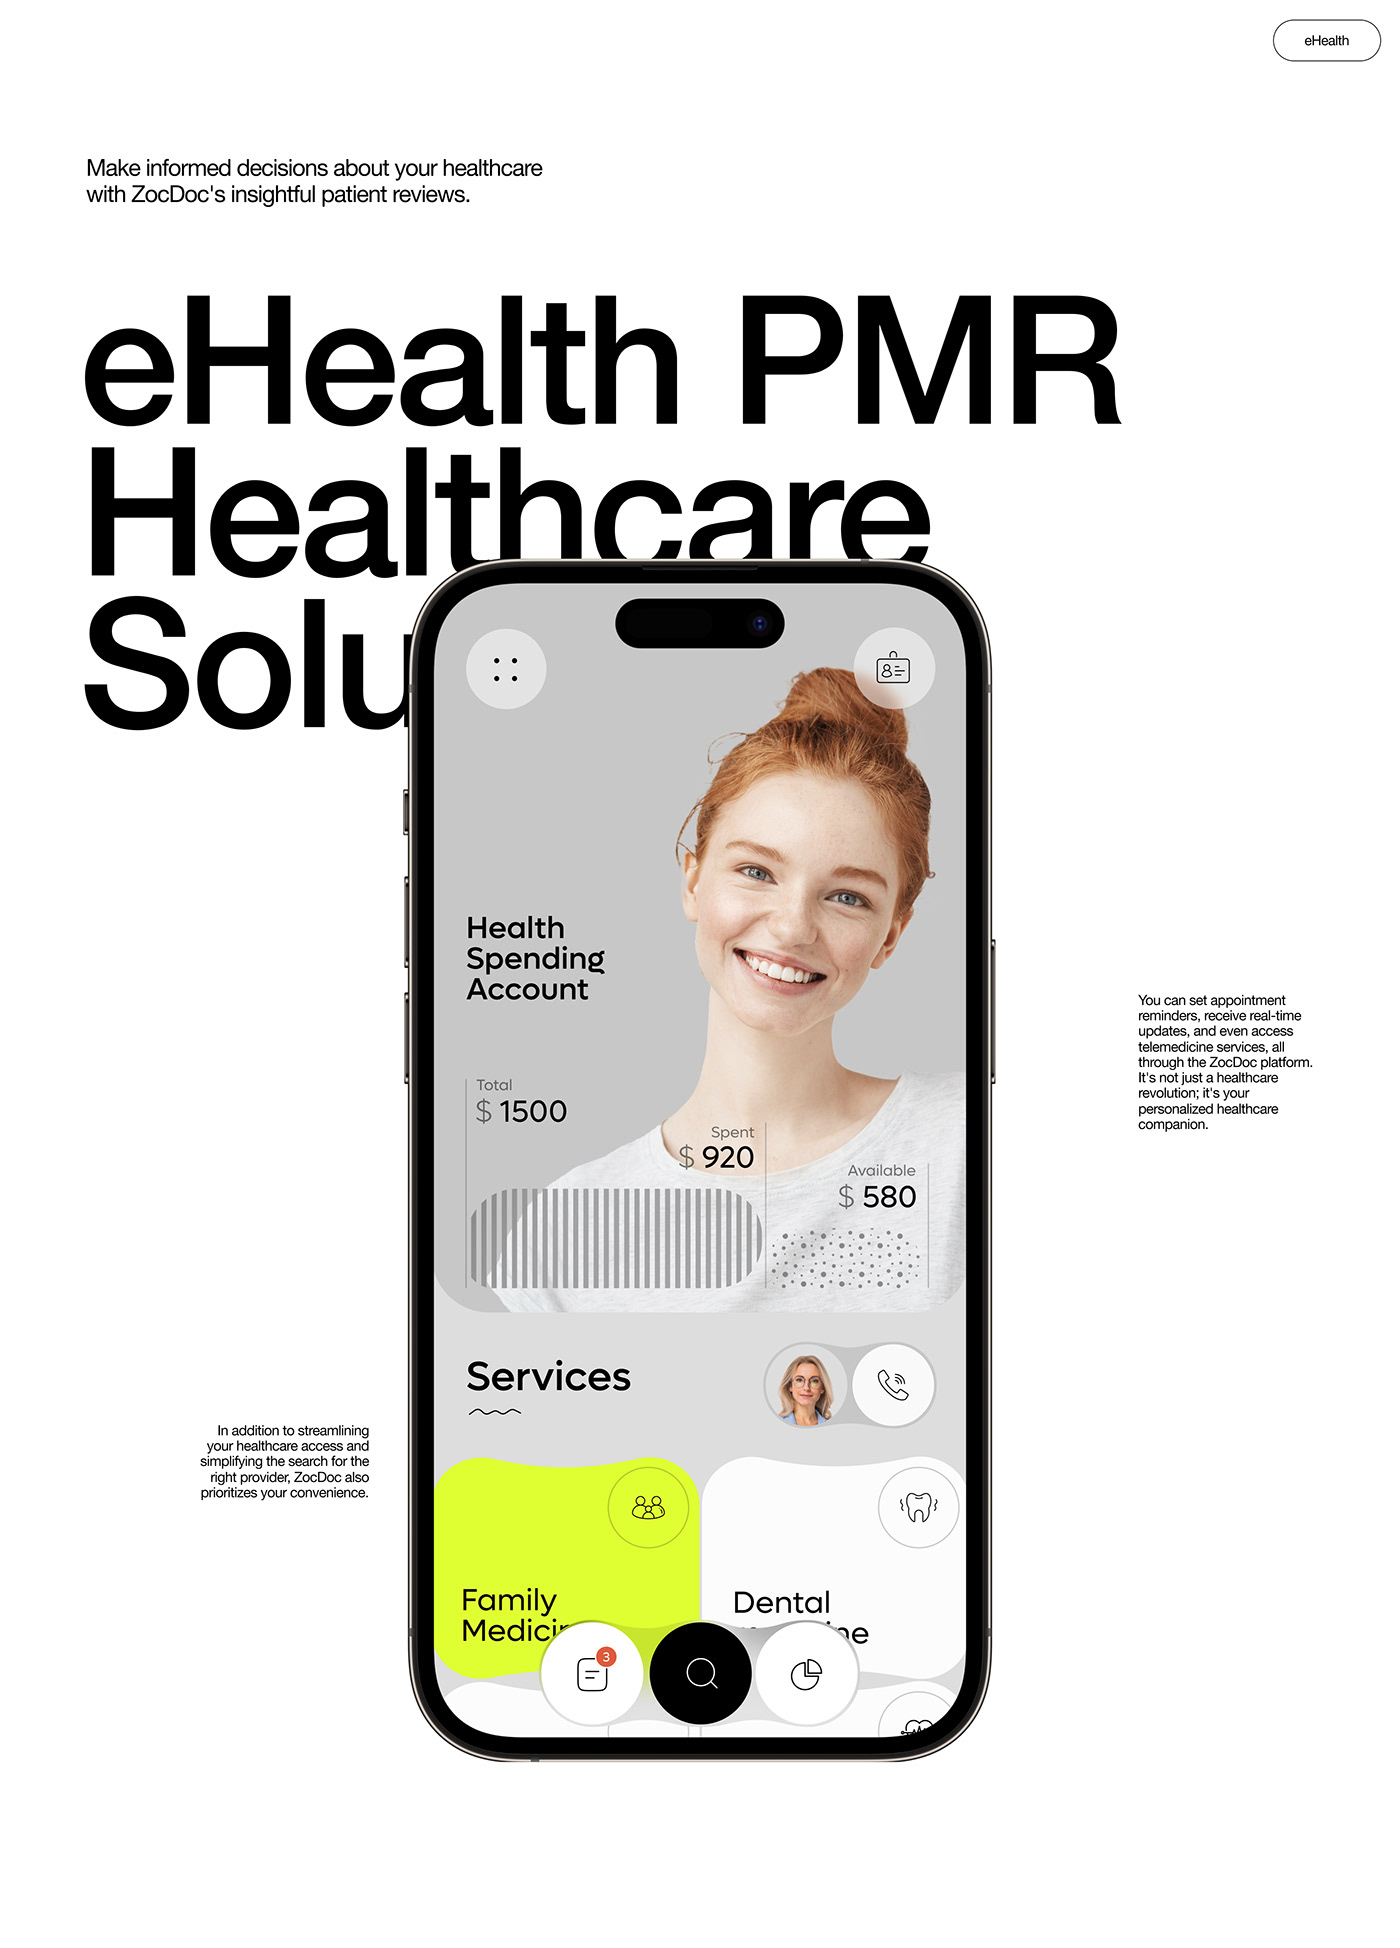 ZocDoc – eHealth PMR Healthcare Solutions